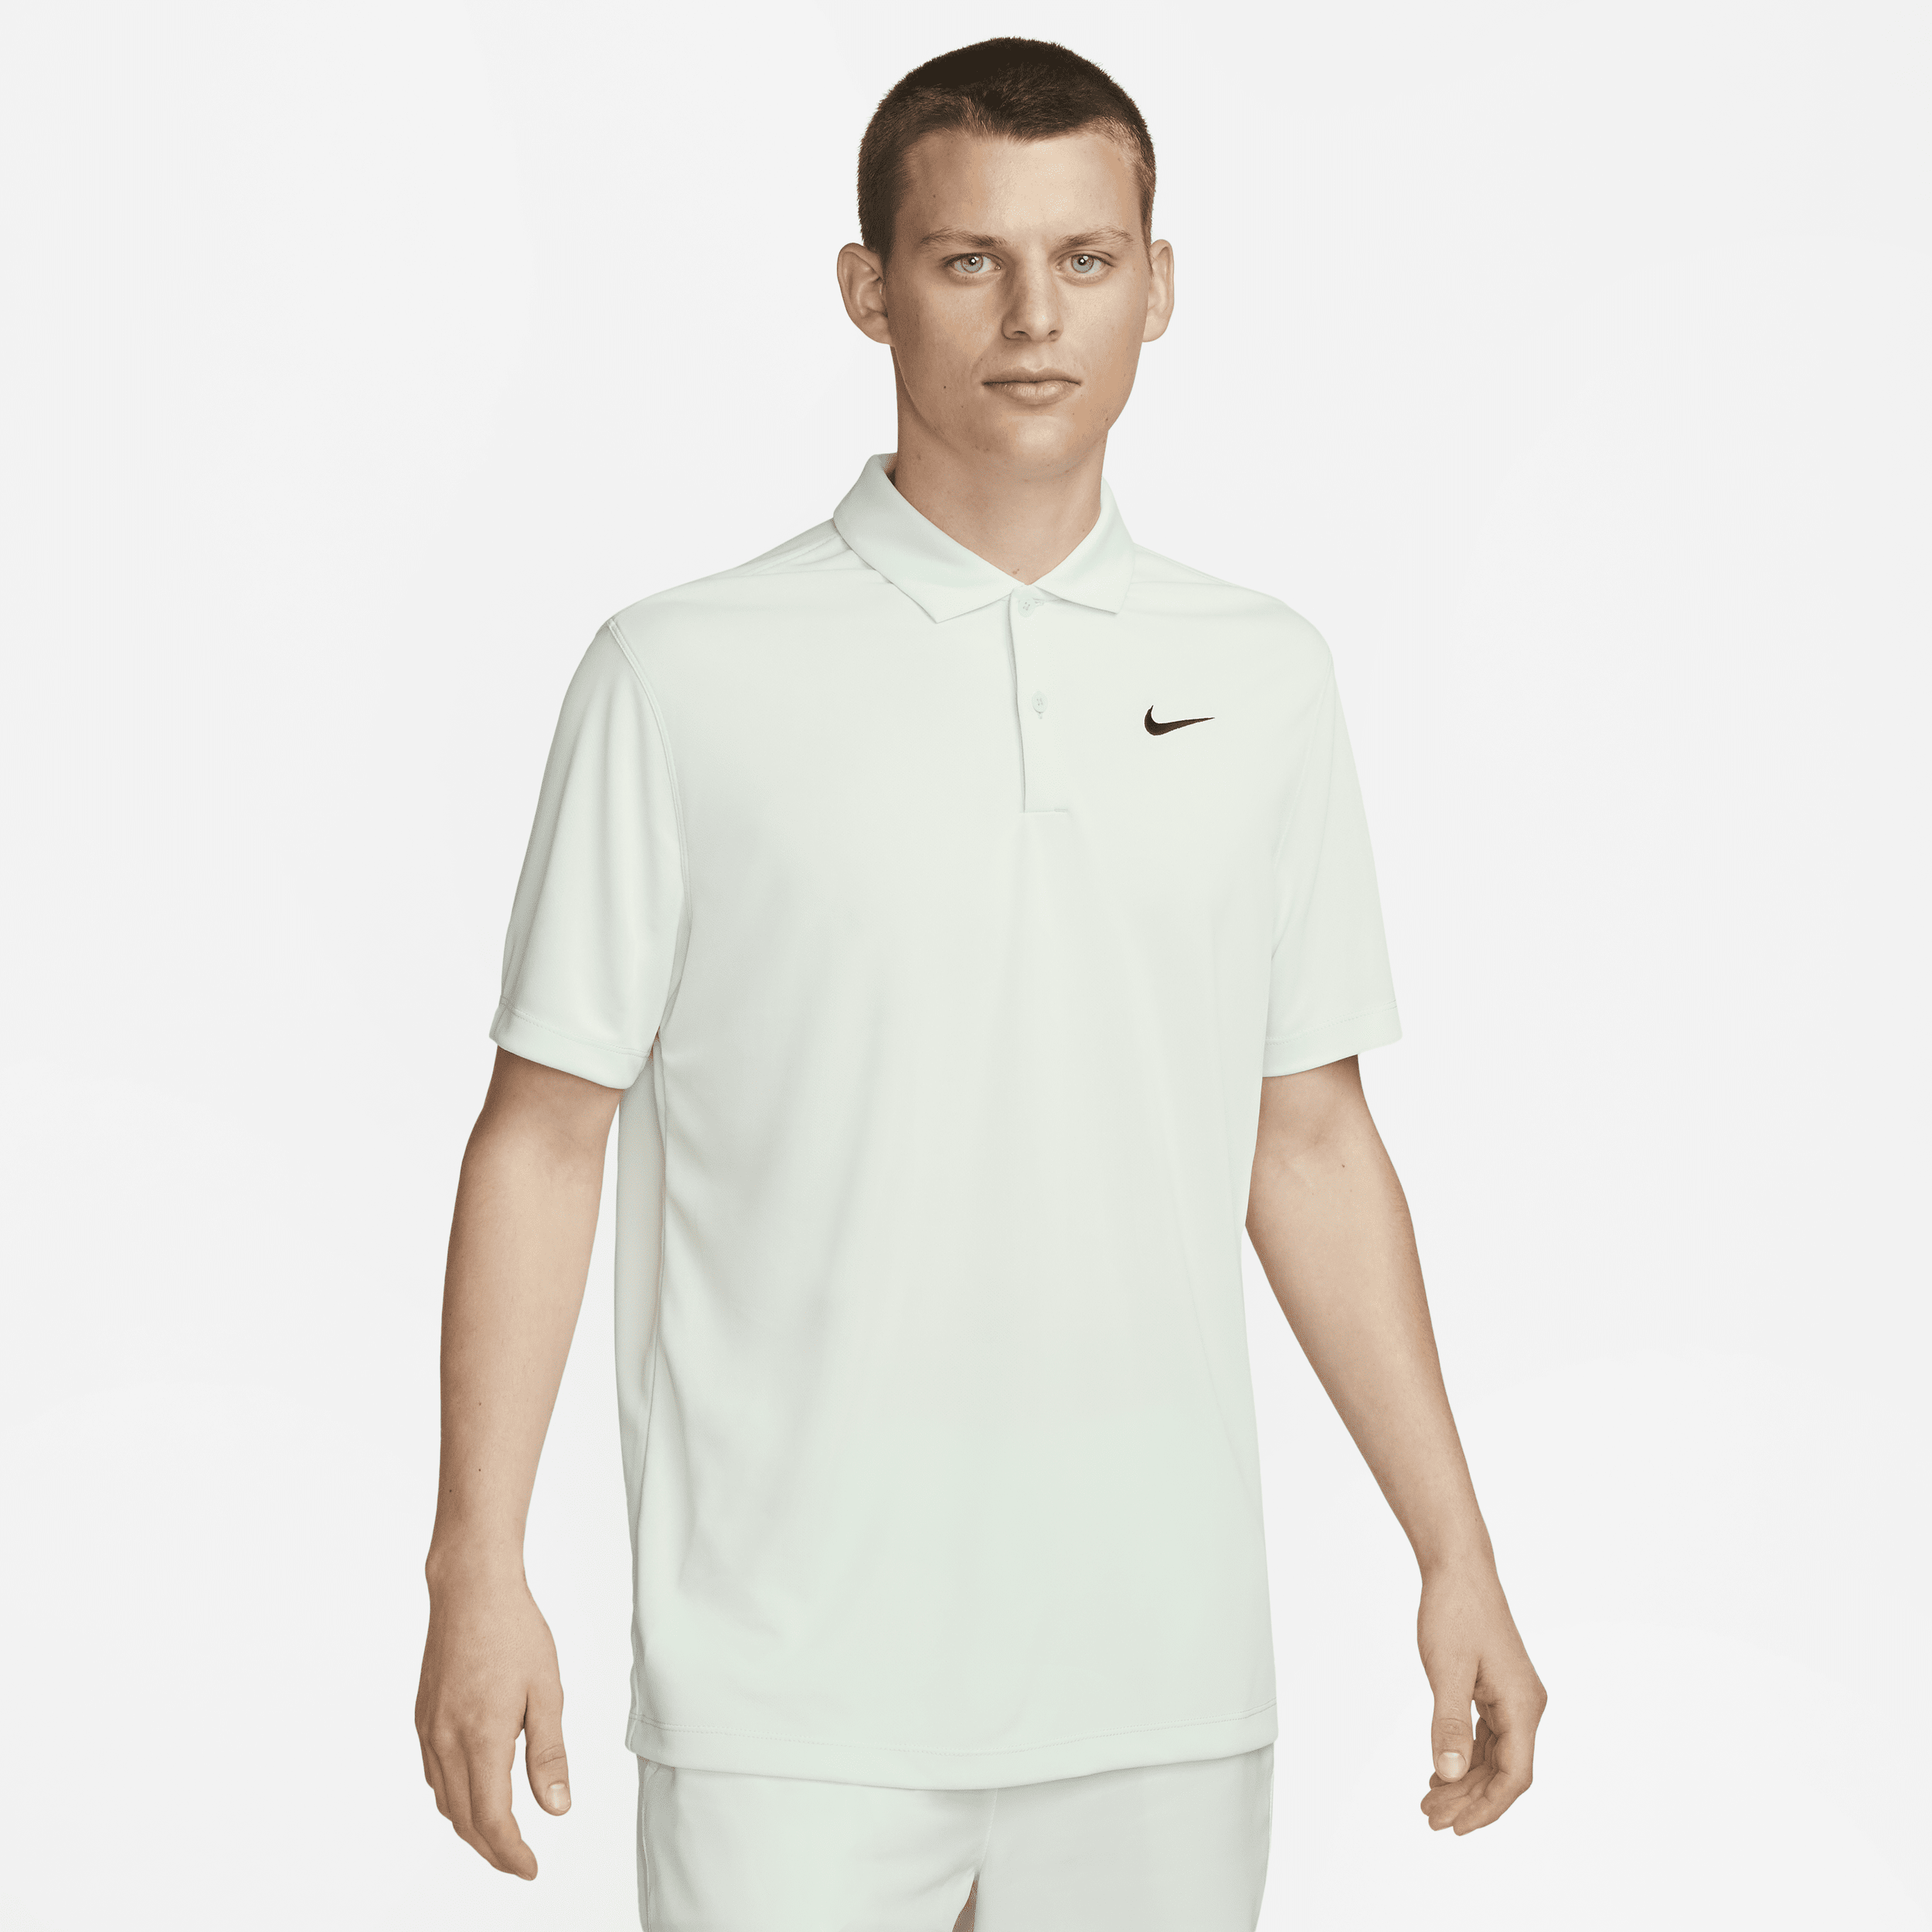 Nike Men's Court Dri-fit Tennis Polo In Green